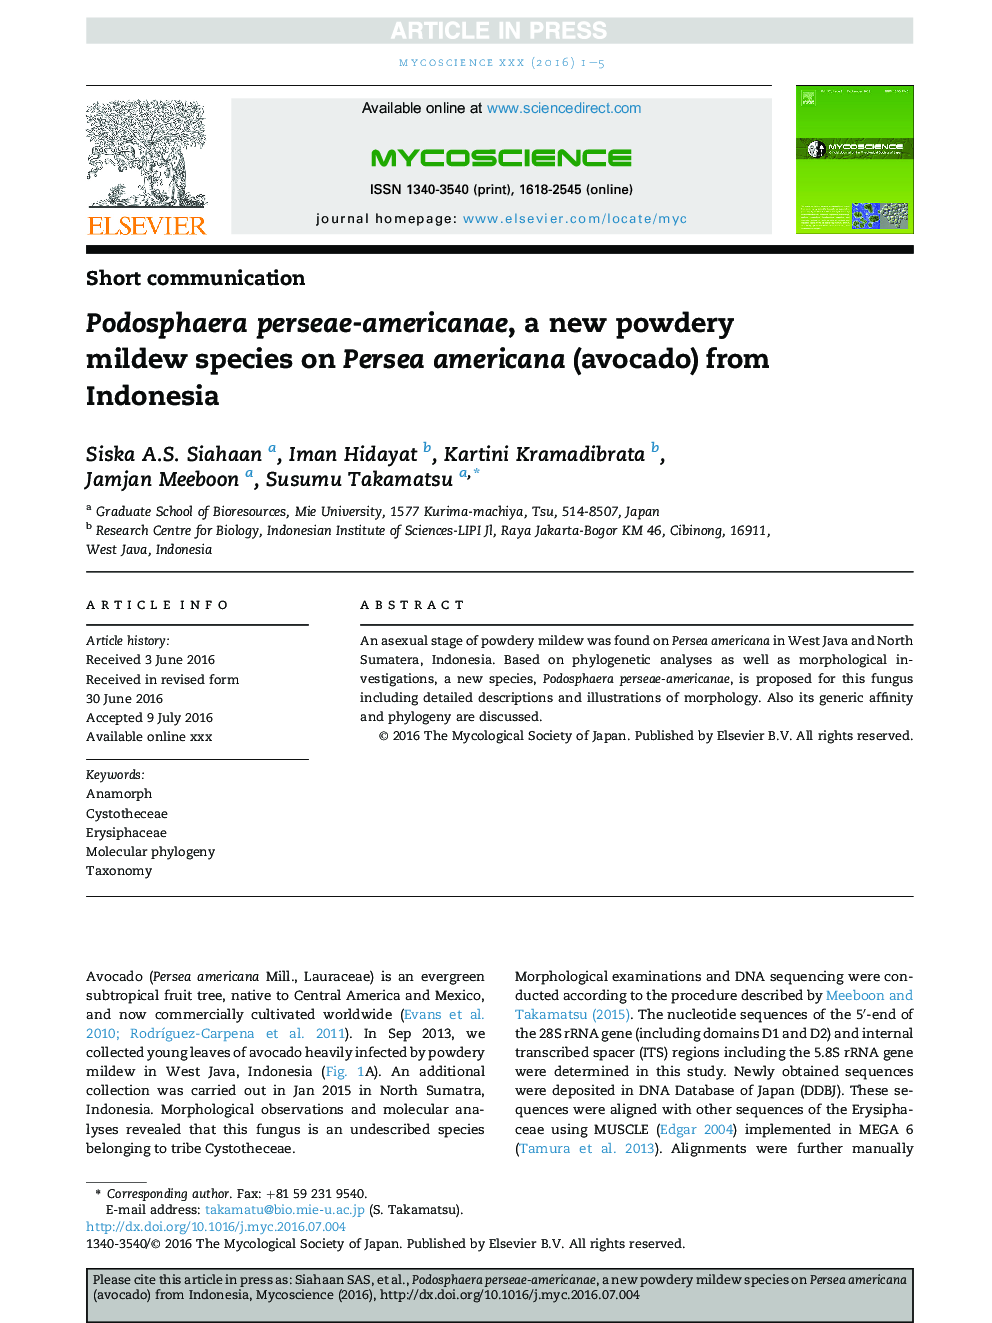 Podosphaera perseae-americanae, a new powdery mildew species on Persea americana (avocado) from Indonesia